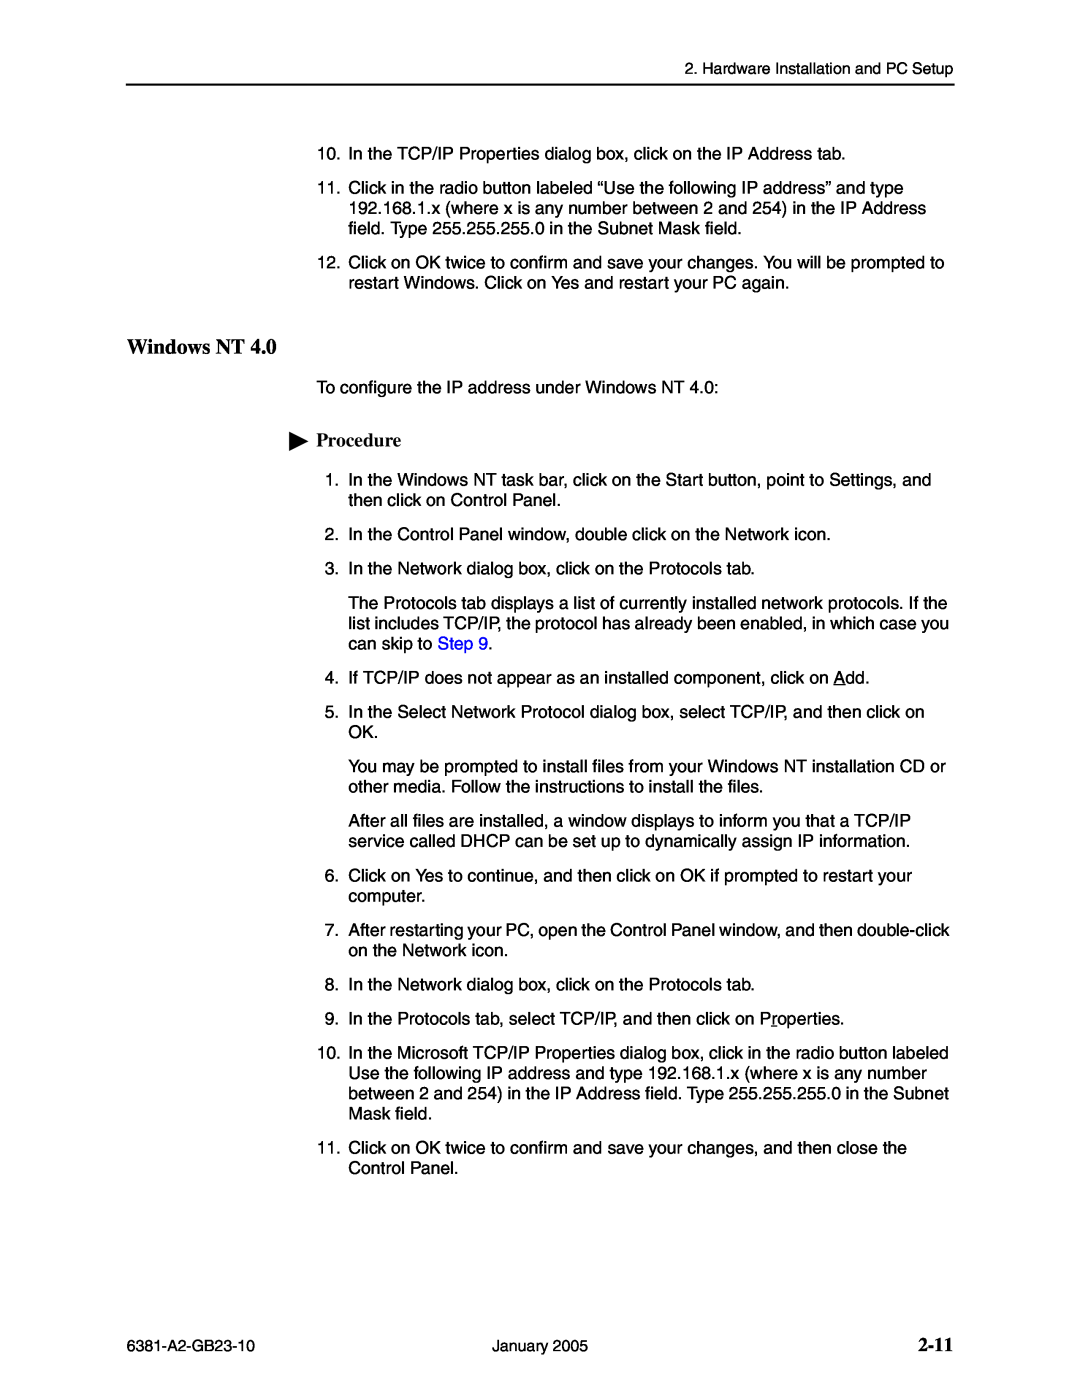 Paradyne 6381-A3 manual Windows NT, 2-11, Procedure 